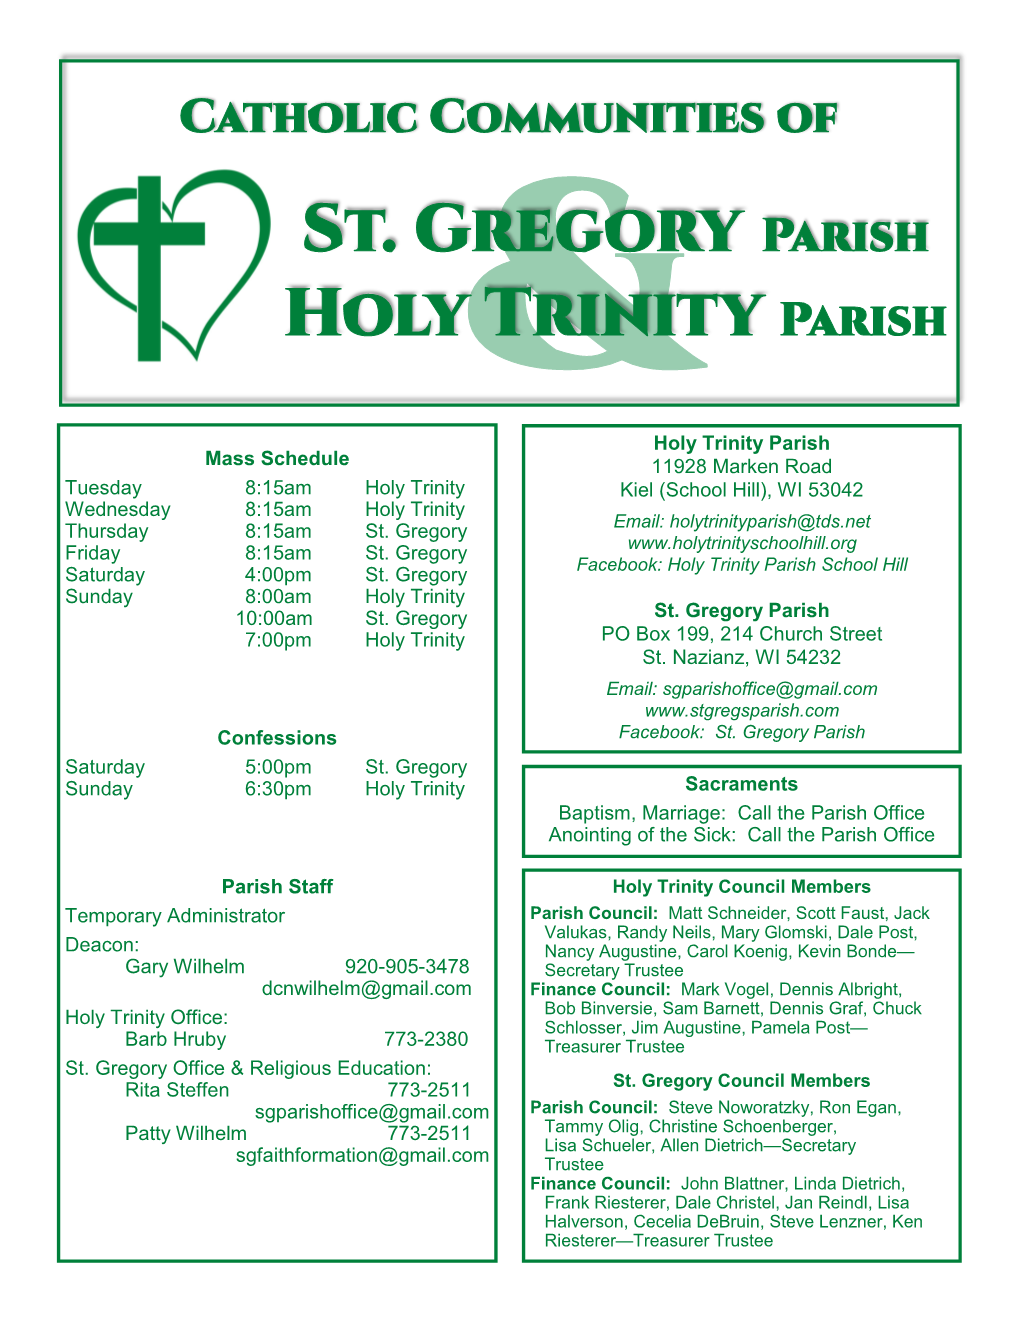 St. Gregory Parish Holy Trinity Parish